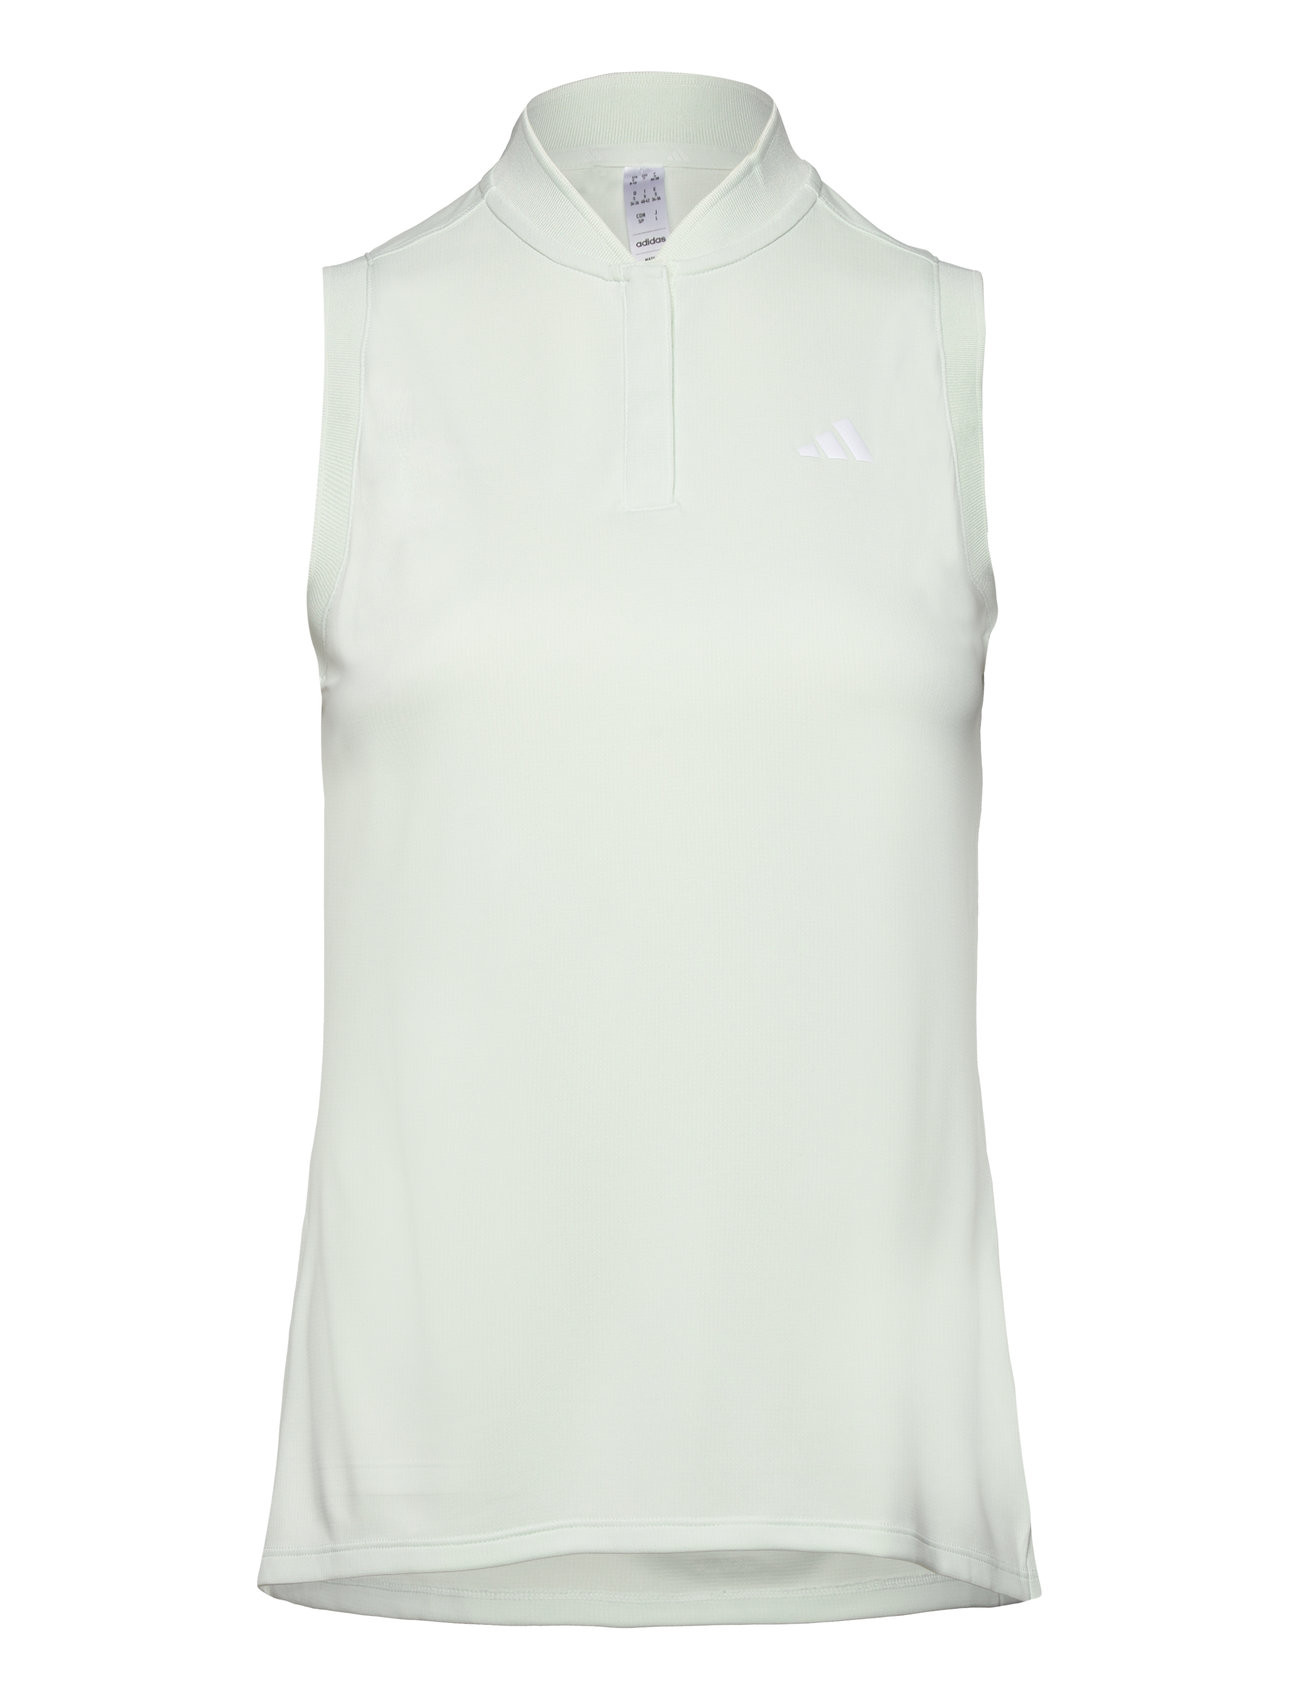 W U365T H.rdy P Sport T-shirts & Tops Polos Green Adidas Golf